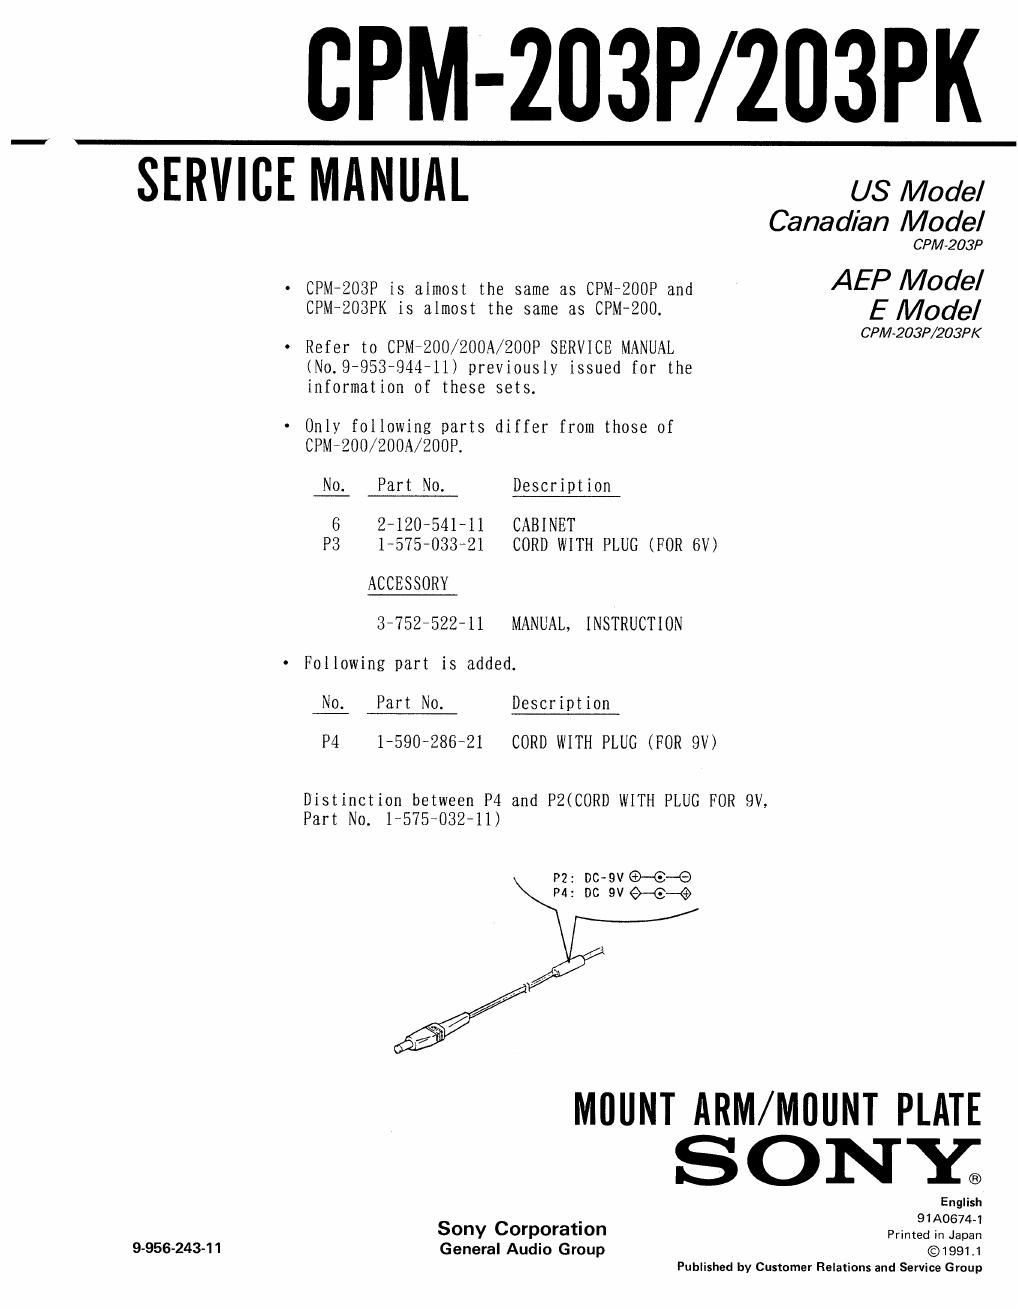 sony cpm 203 pk service manual